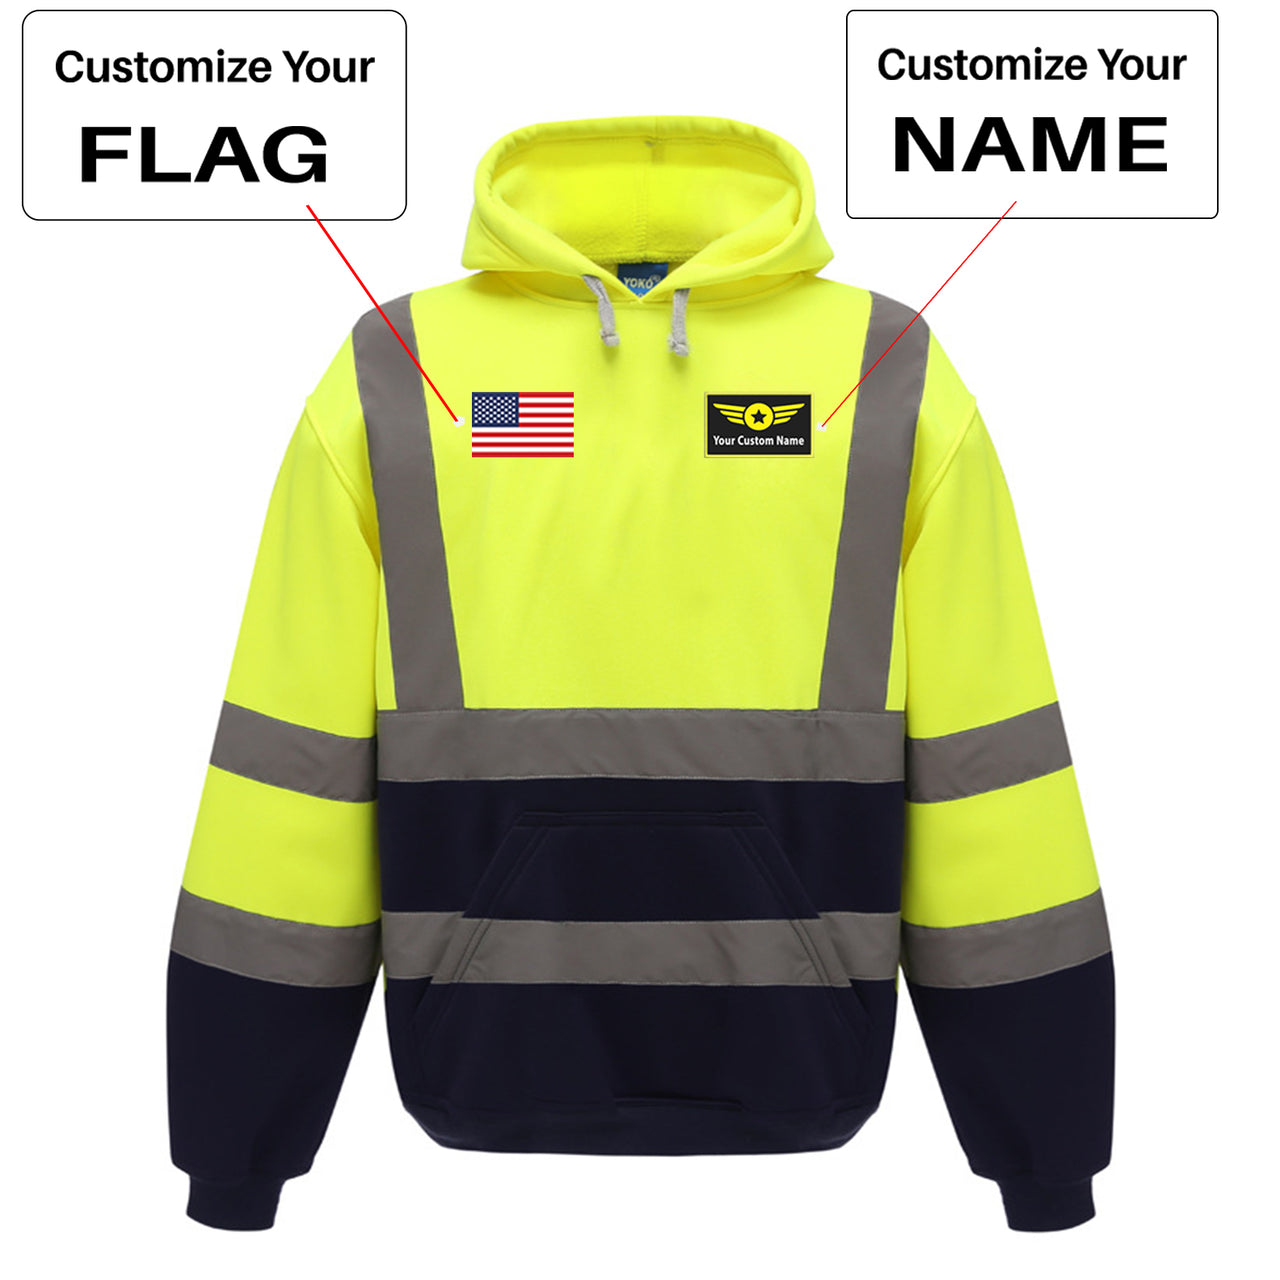 Custom Name & Badge & Flag Designed Reflective Hoodies